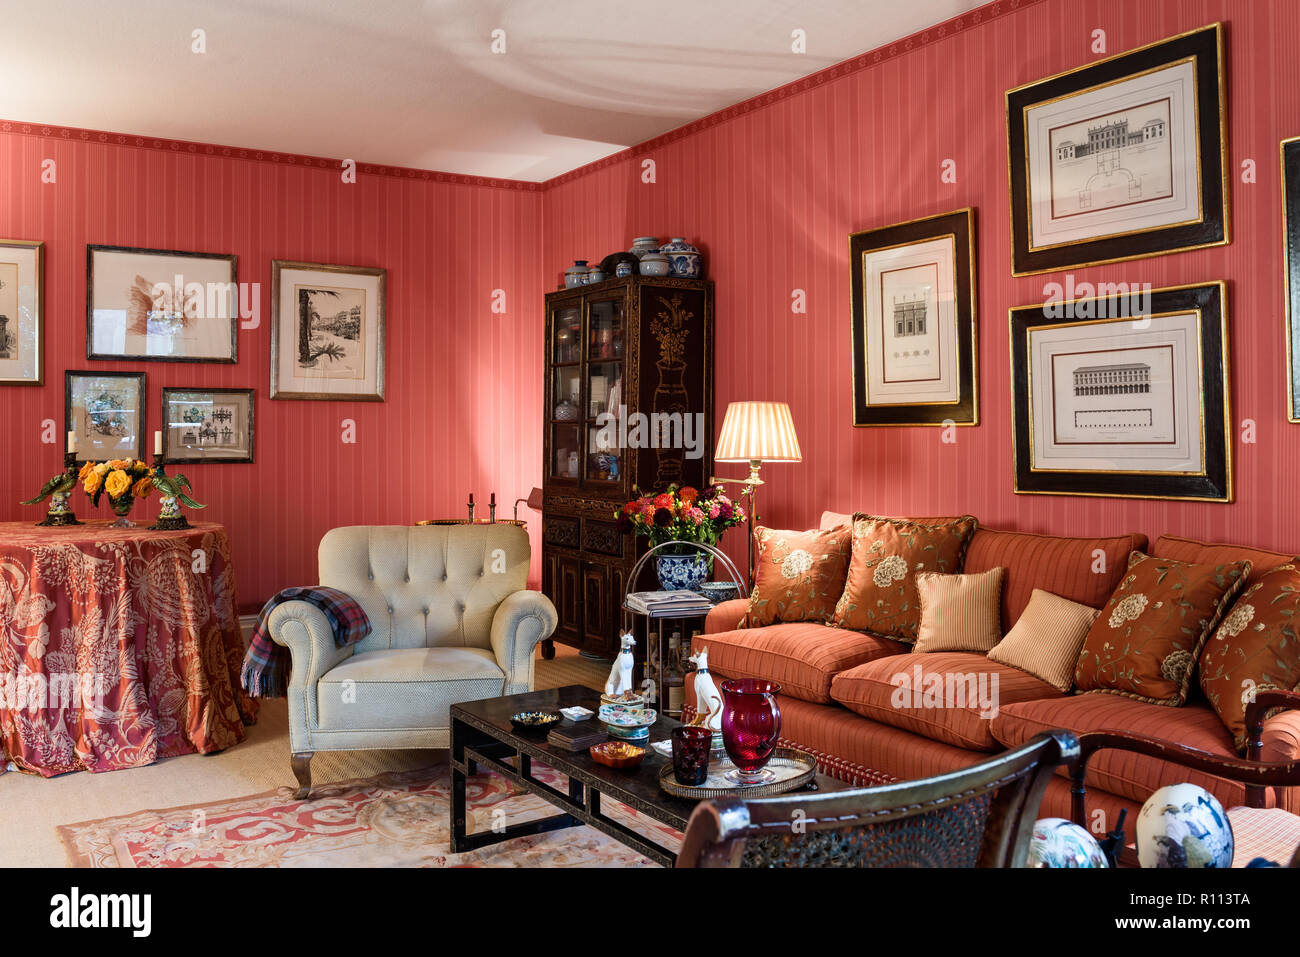 https://c8.alamy.com/comp/R113TA/living-room-with-pink-wallpaper-R113TA.jpg